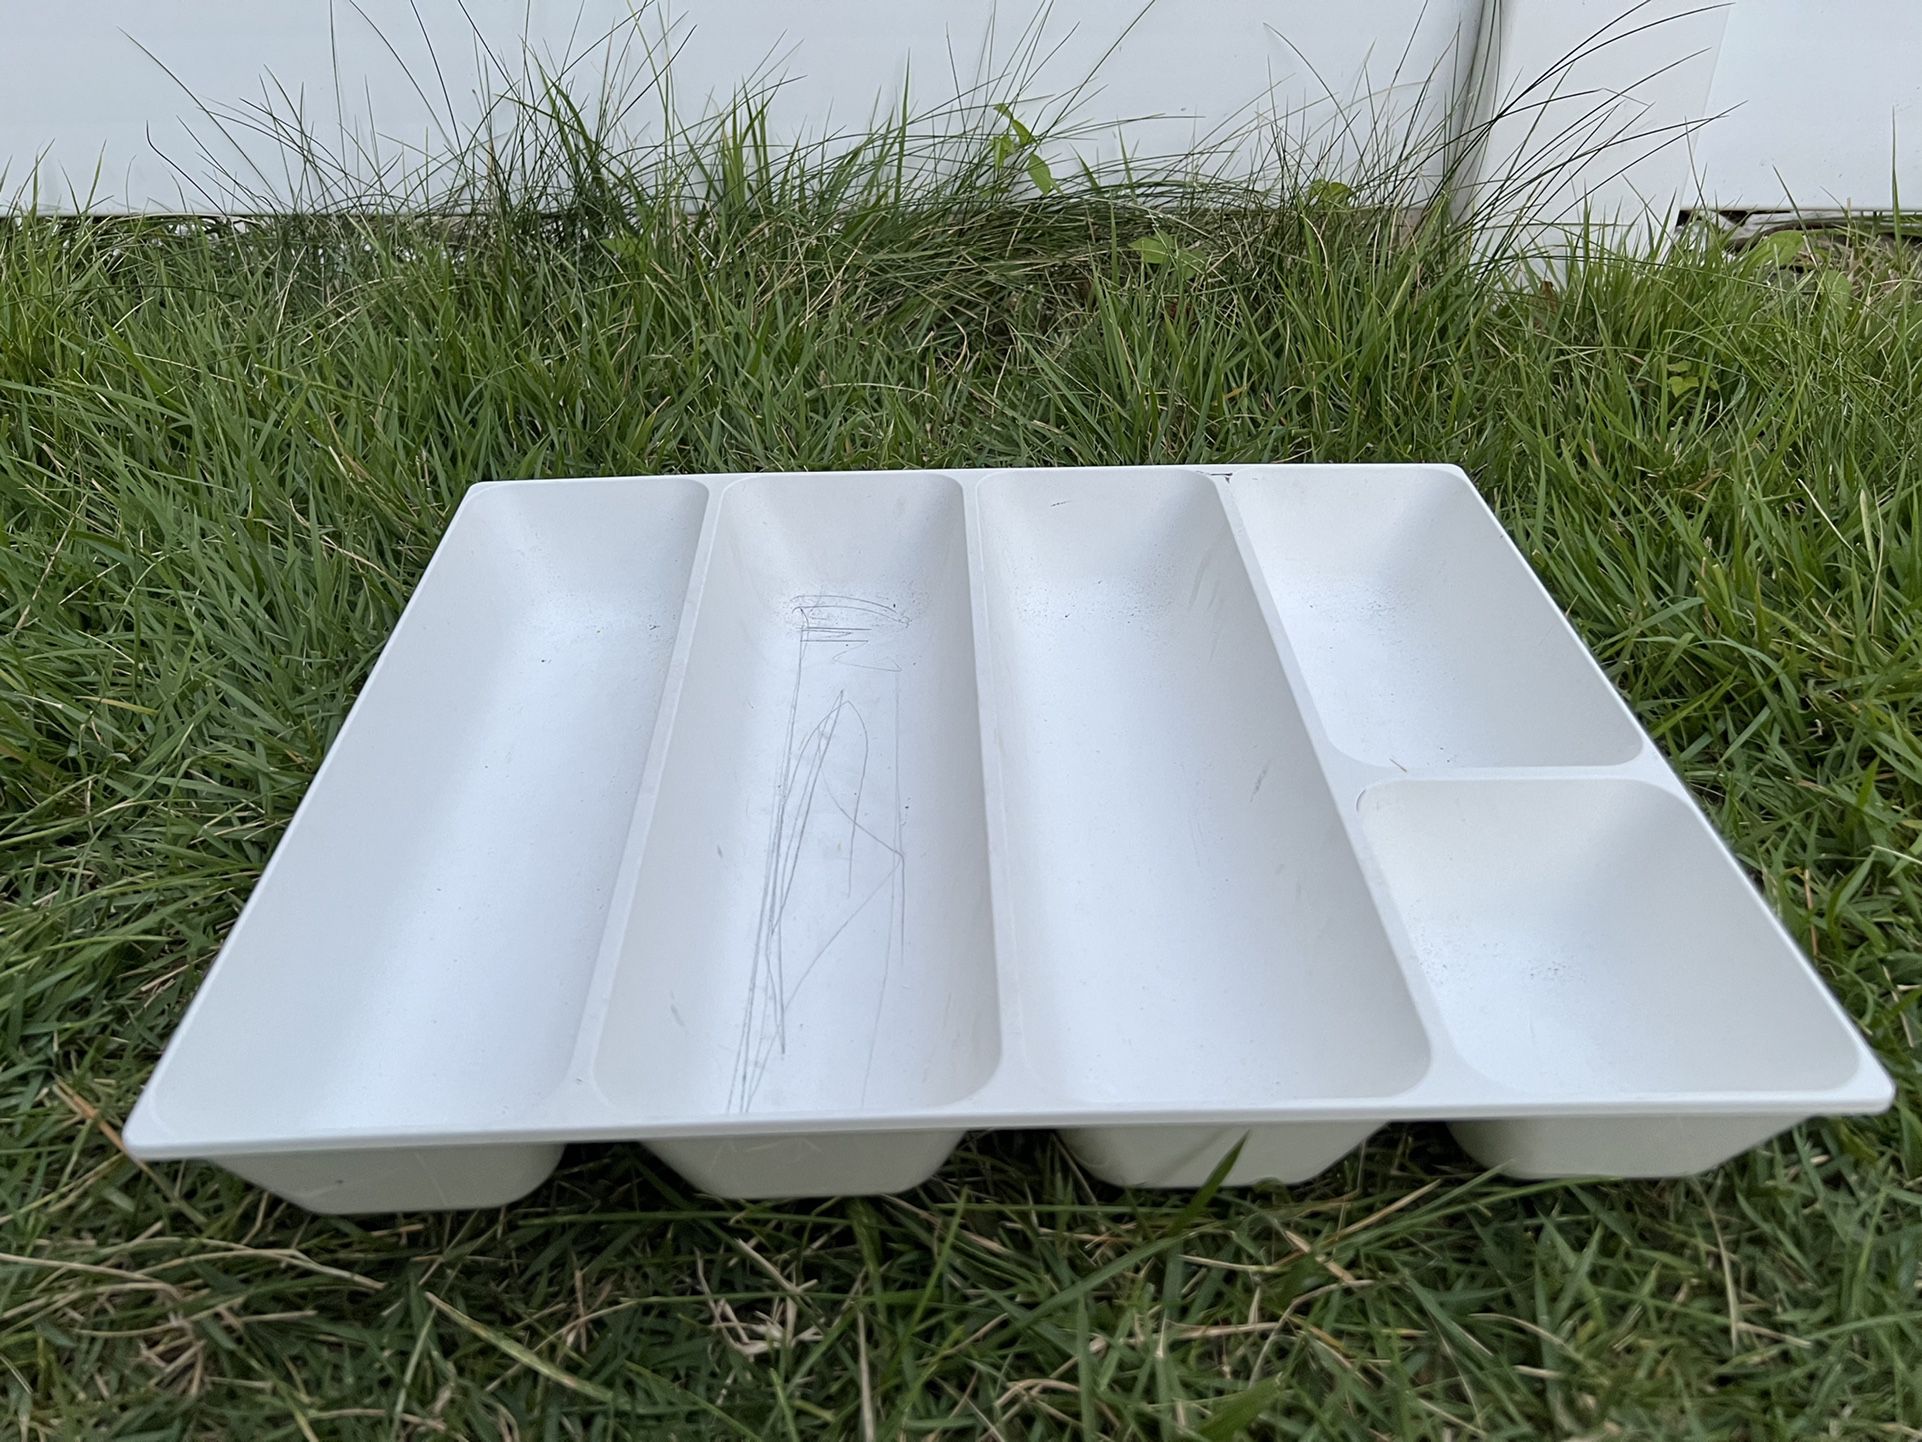 Ikea plastic tray for desk organization